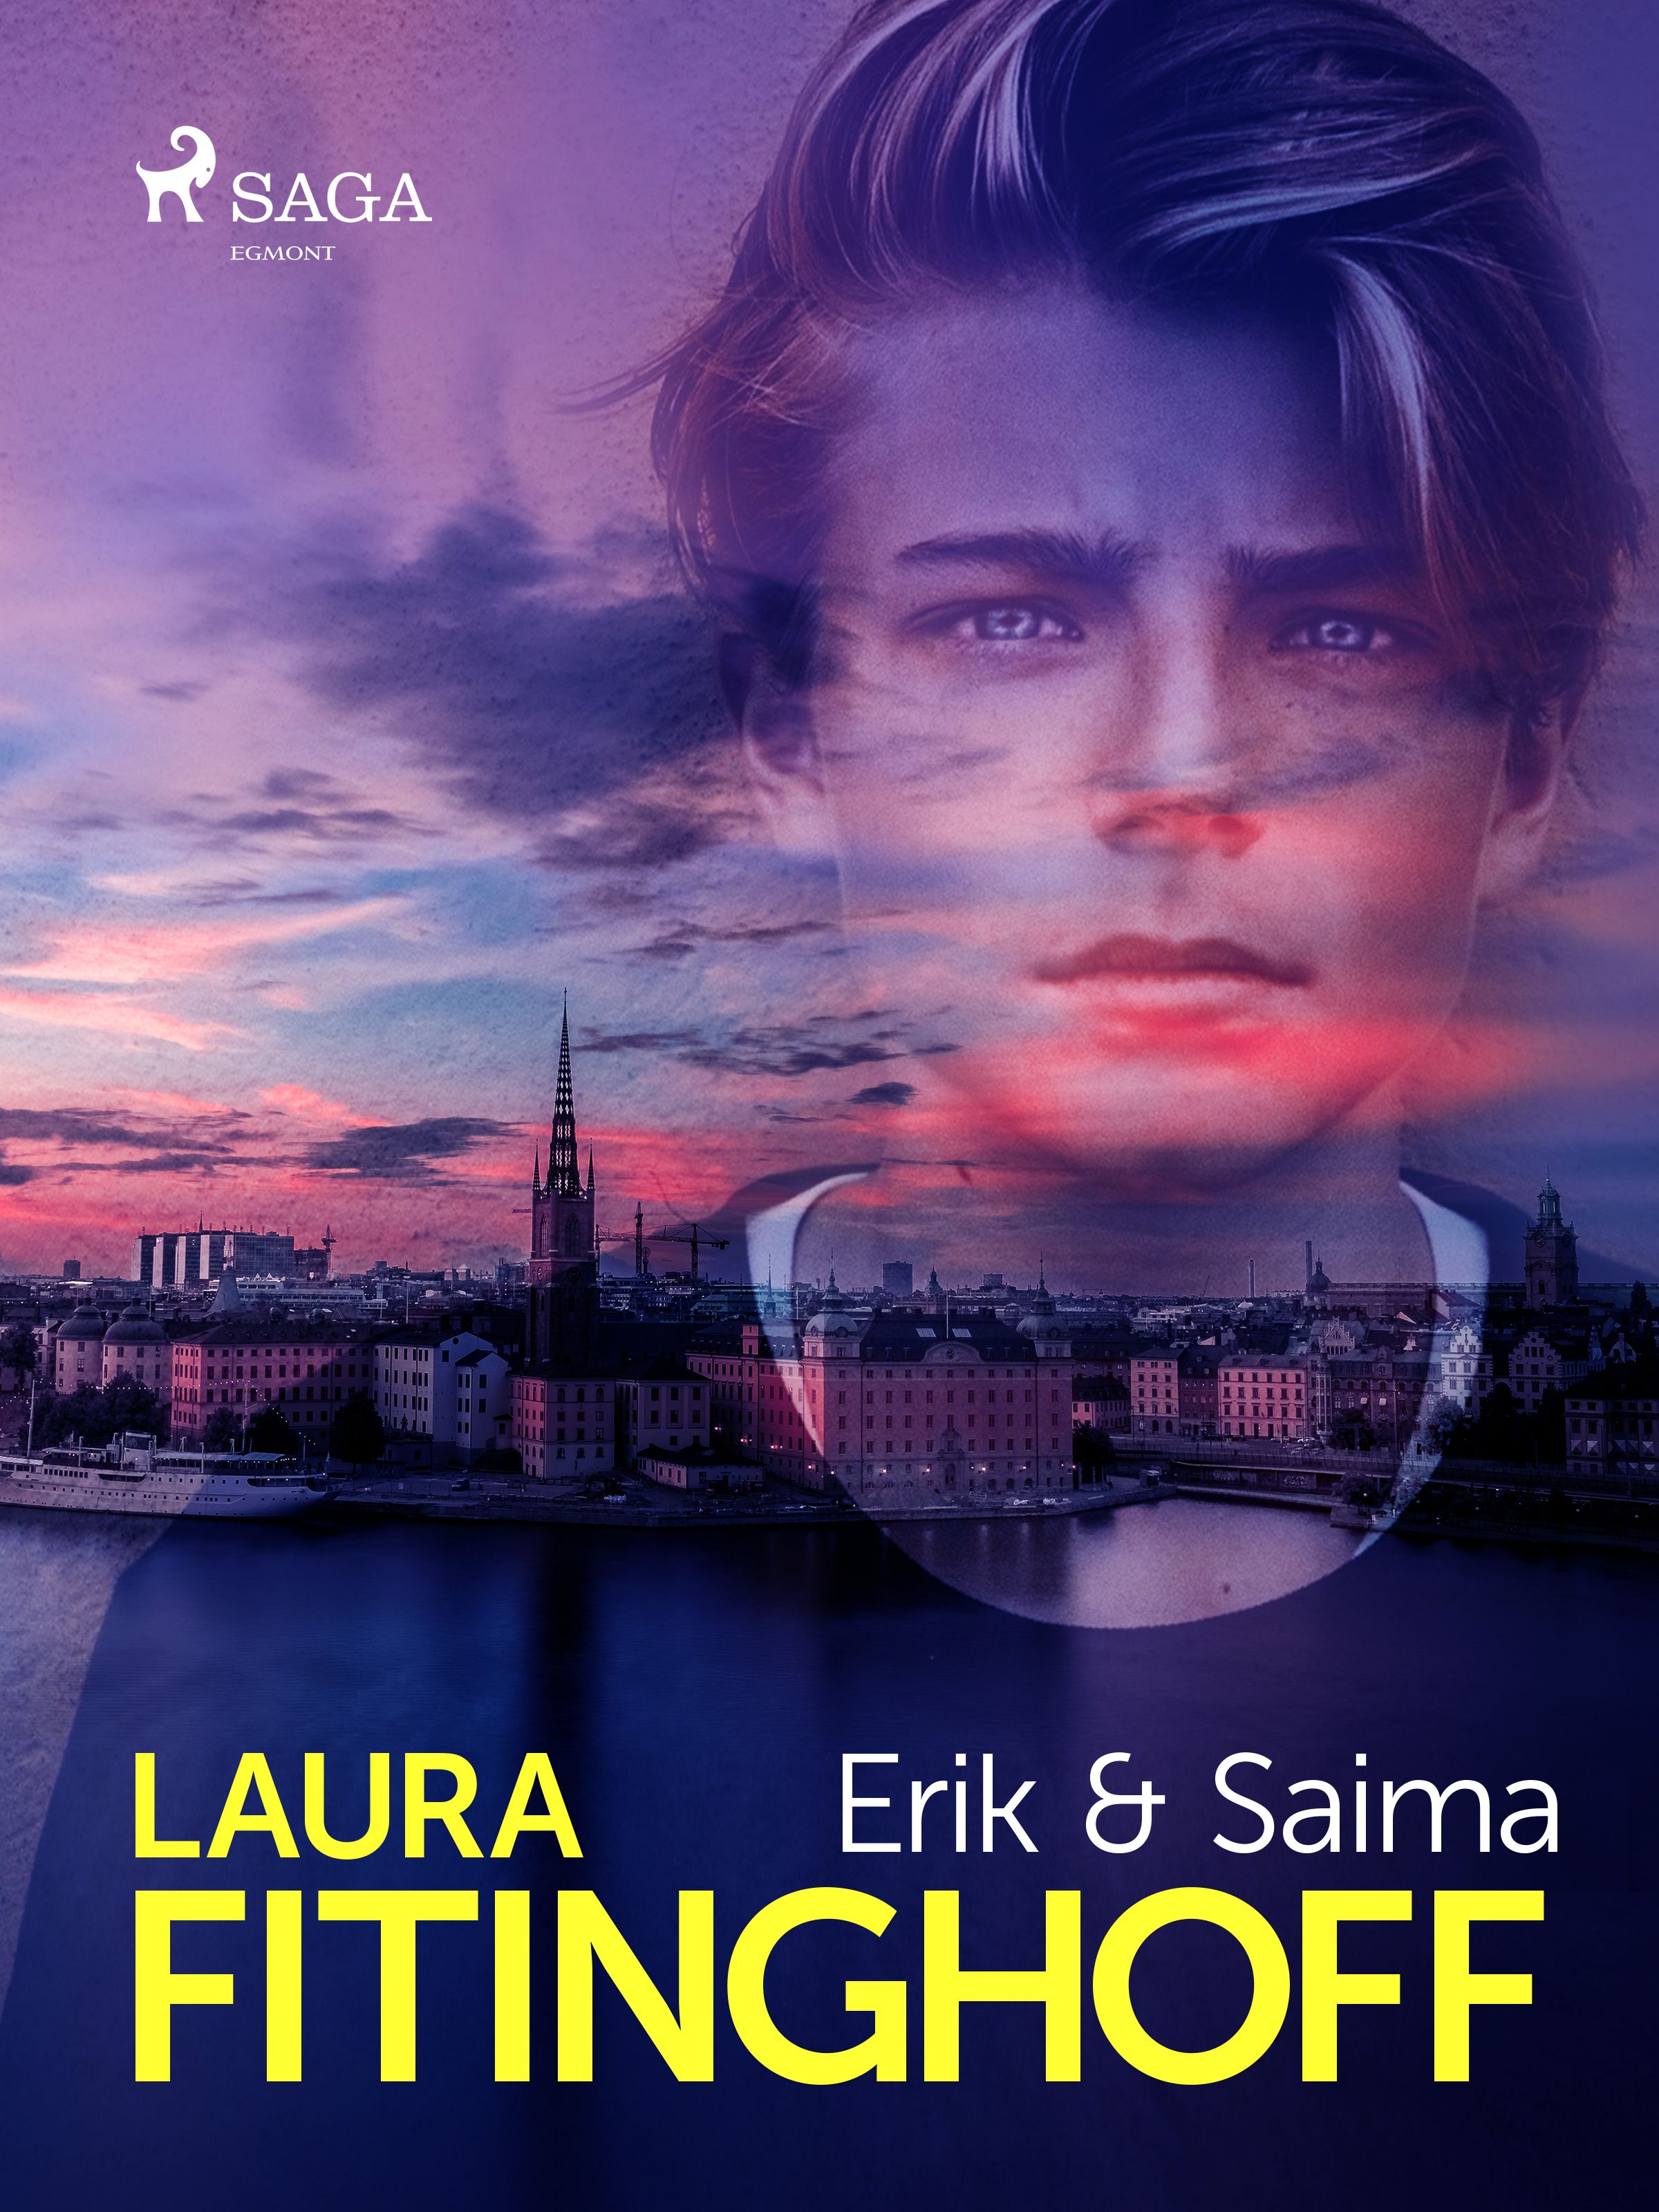 Erik och Saima, e-bog af Laura Fitinghoff